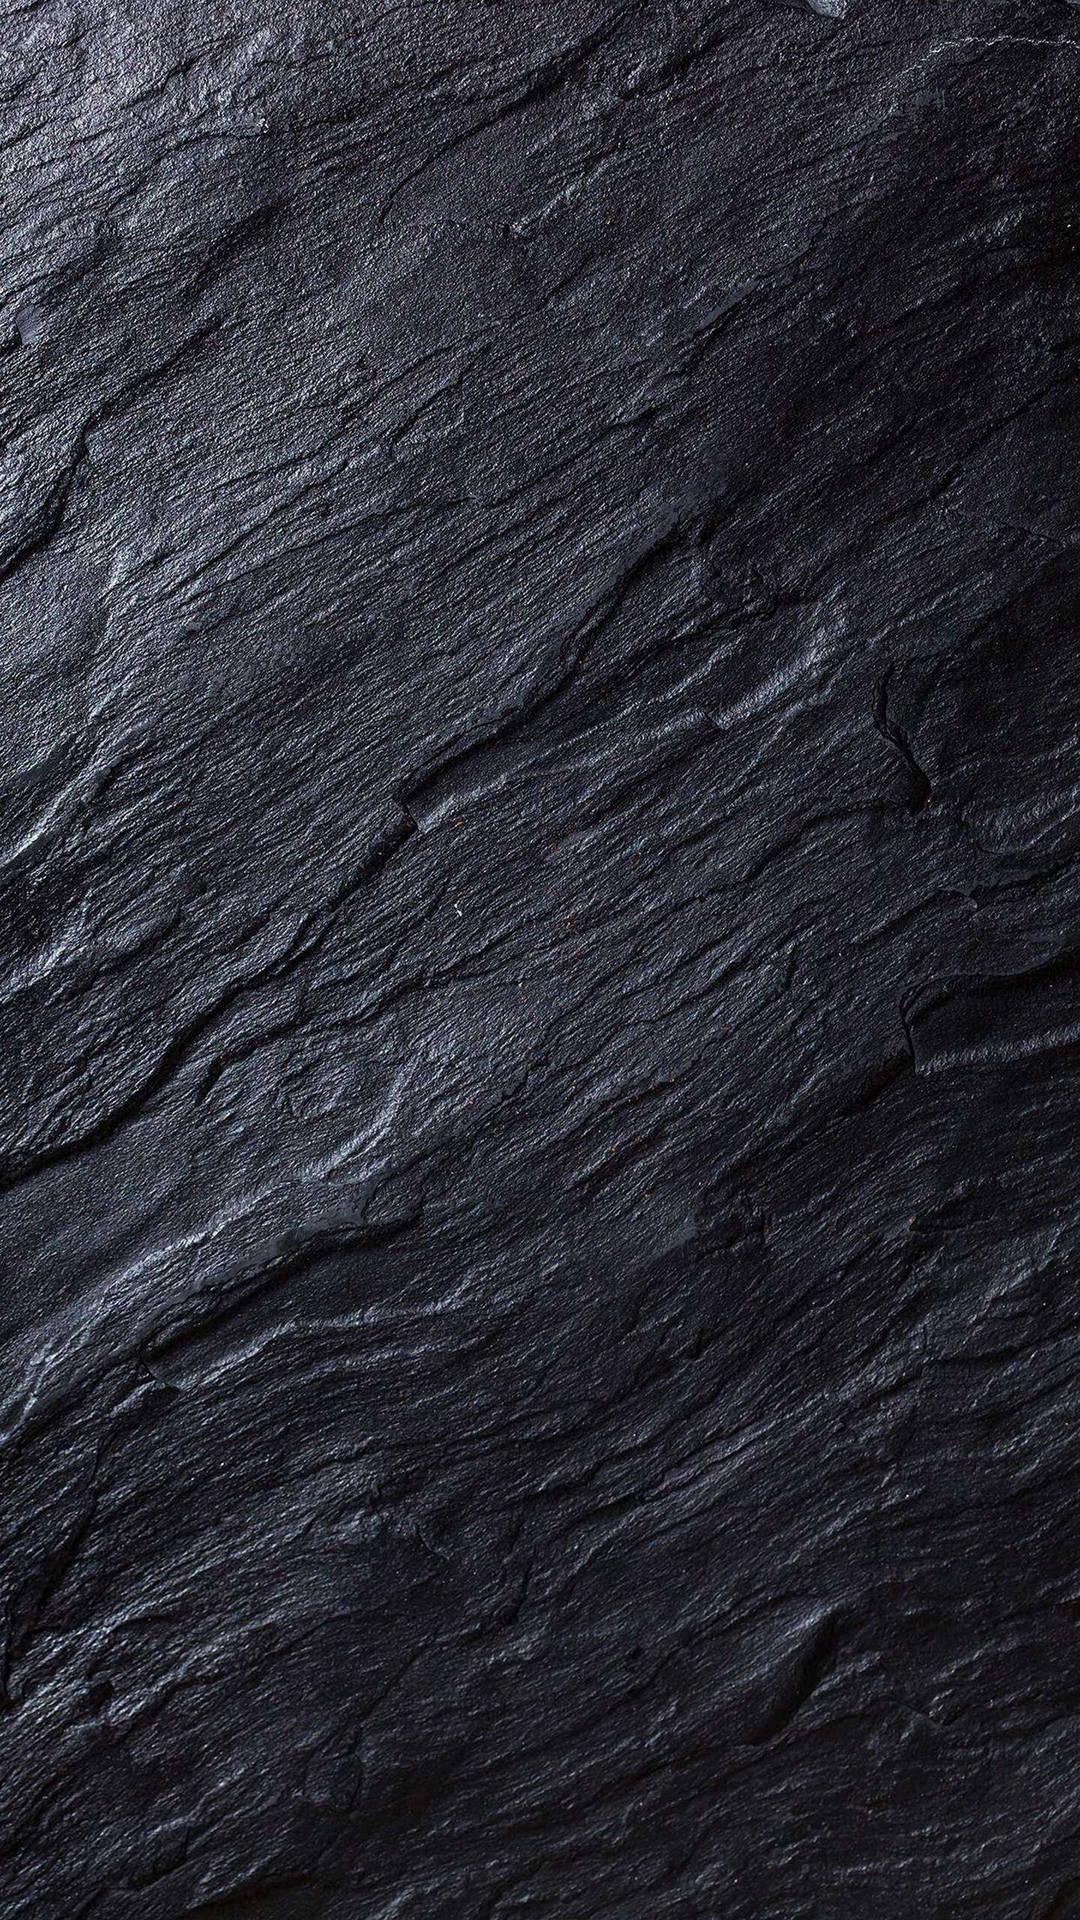 Black Iphone Rock Texture Wallpaper